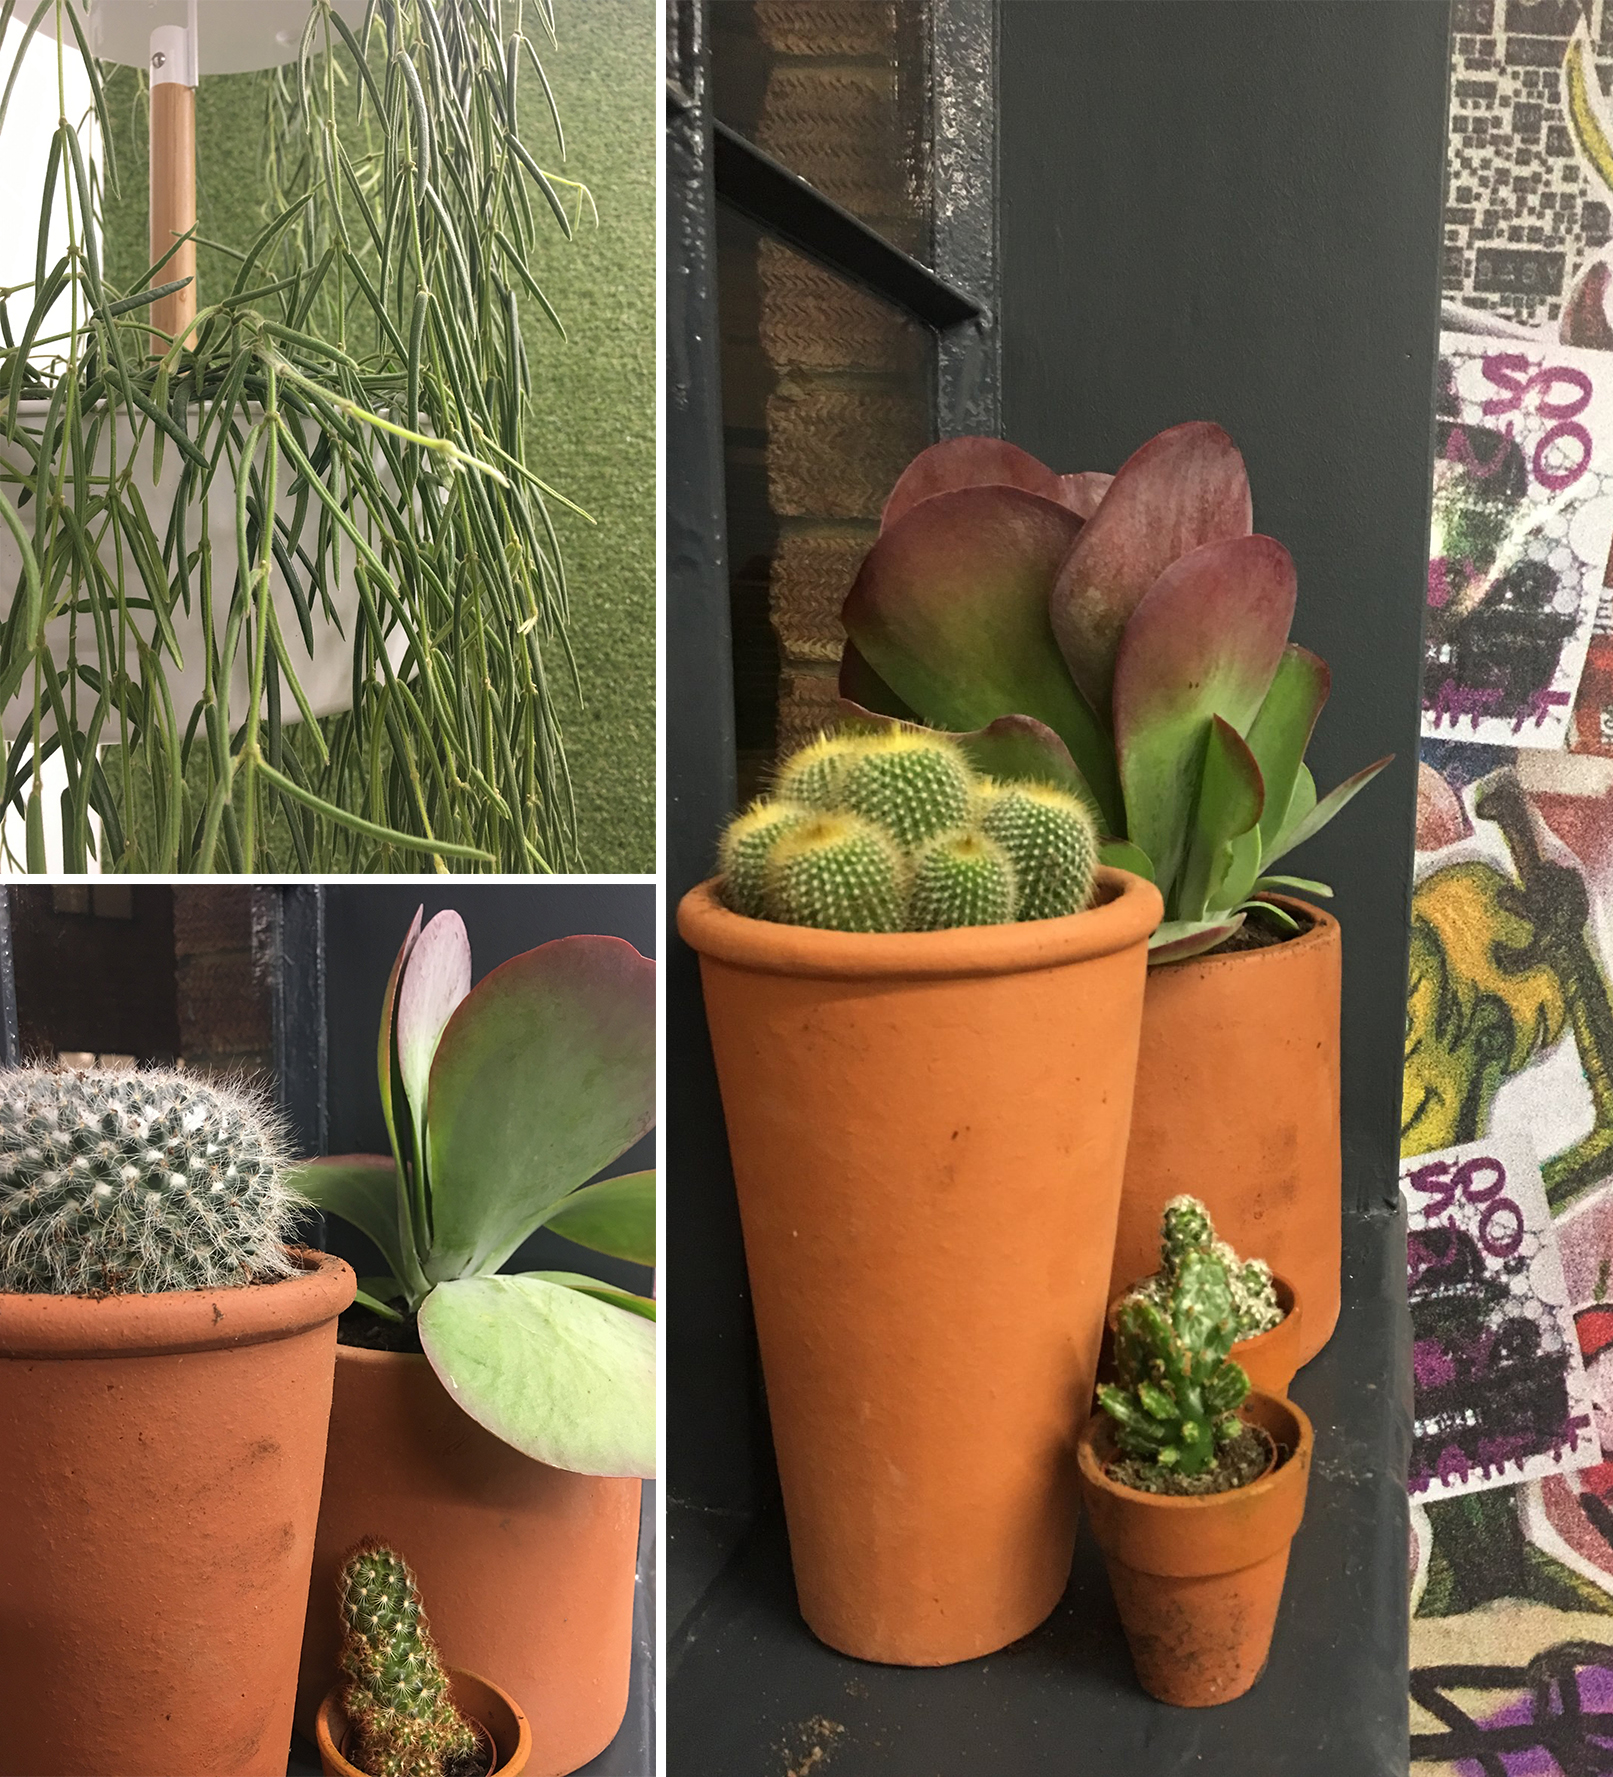 Meristem - cacti and plants